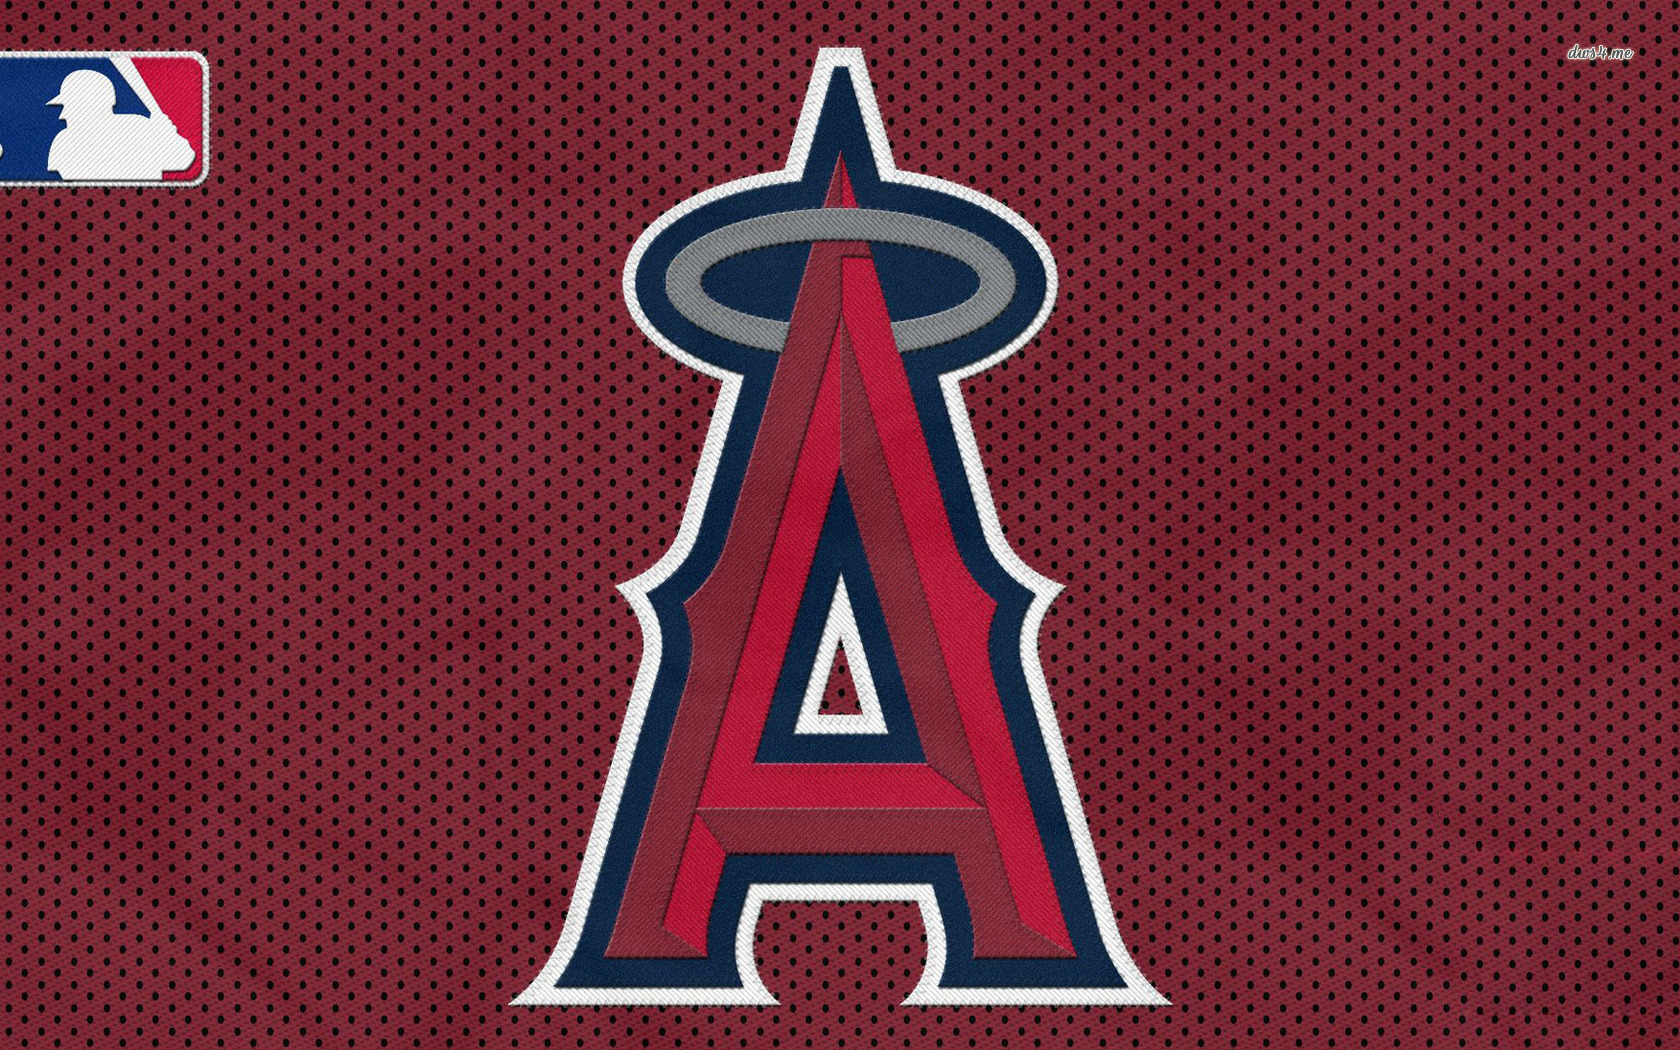 Los Angeles Angels of Anaheim wallpaper 1280x800 Los Angeles Angels of